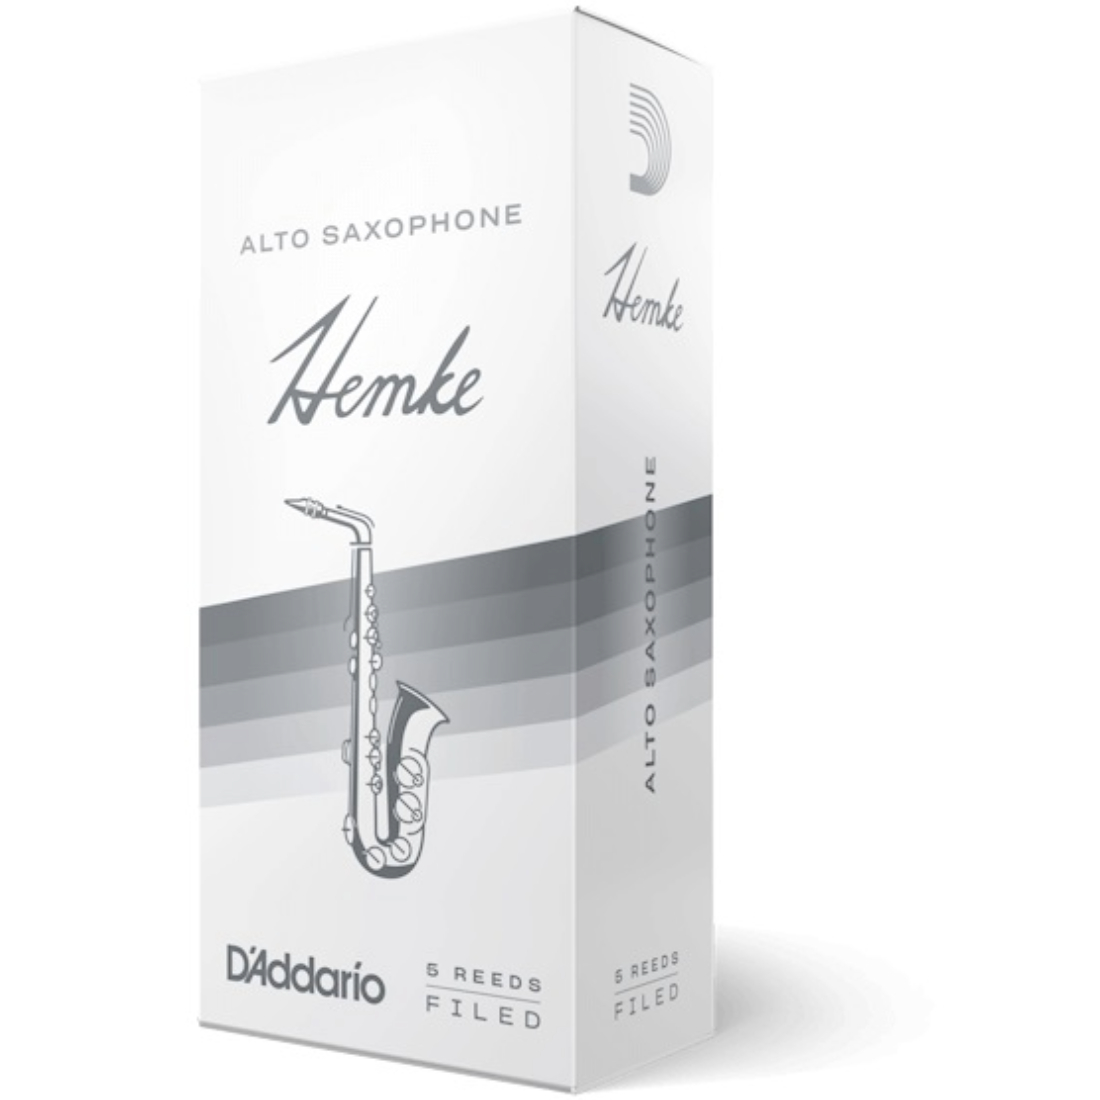 White and grey box of 5 Hemke alto saxophone reeds - strength of 3